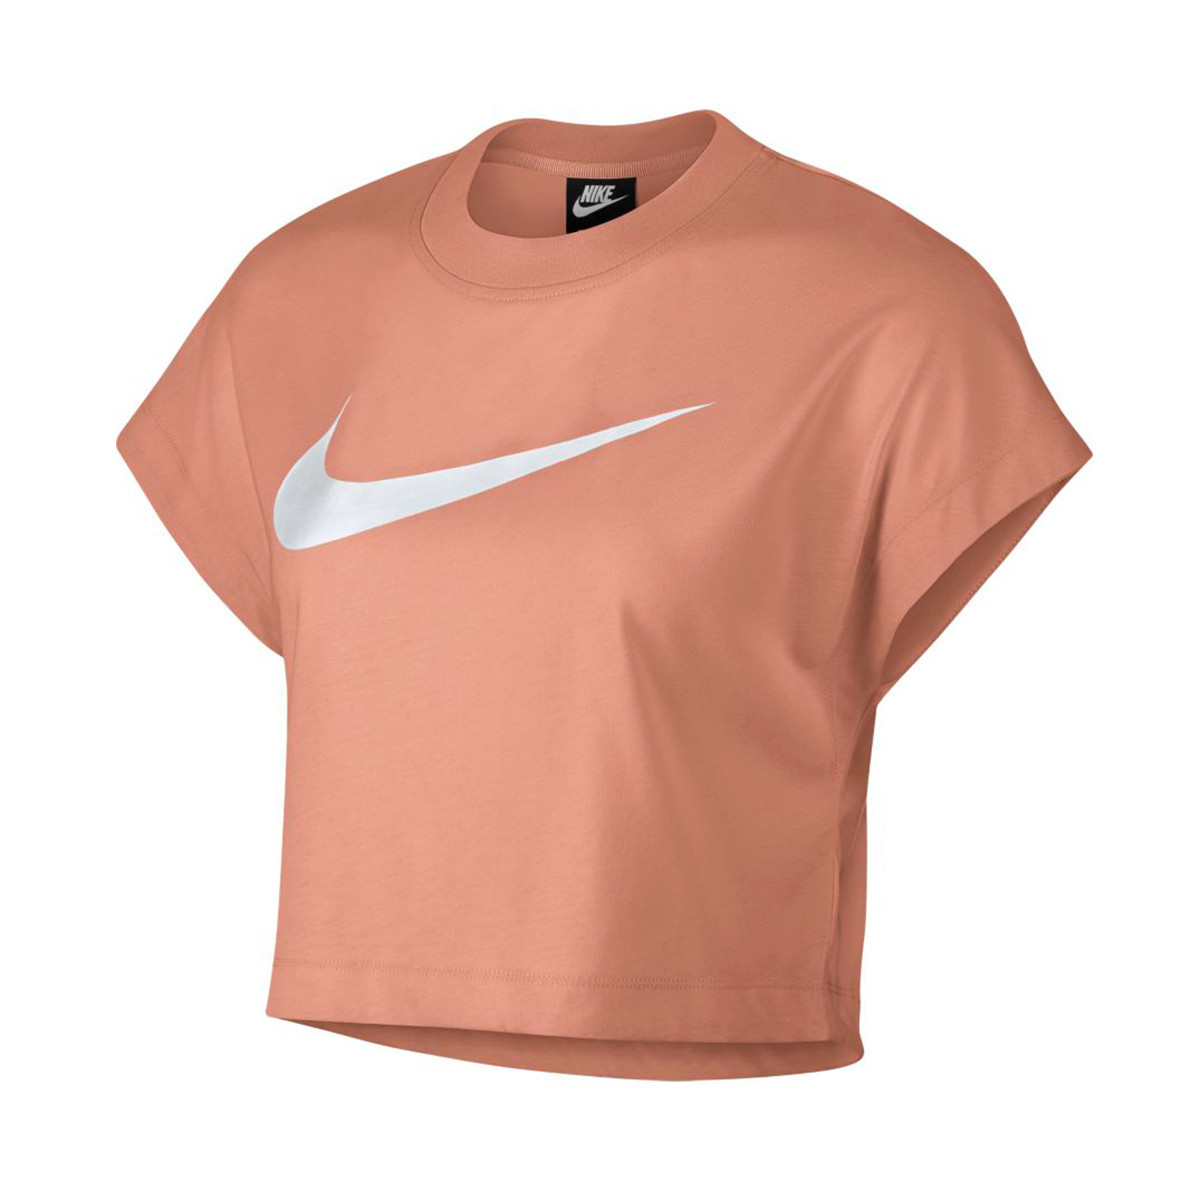 Camiseta Nike Sportswear NSW Mujer Rose gold-White - Tienda de fútbol  Fútbol Emotion